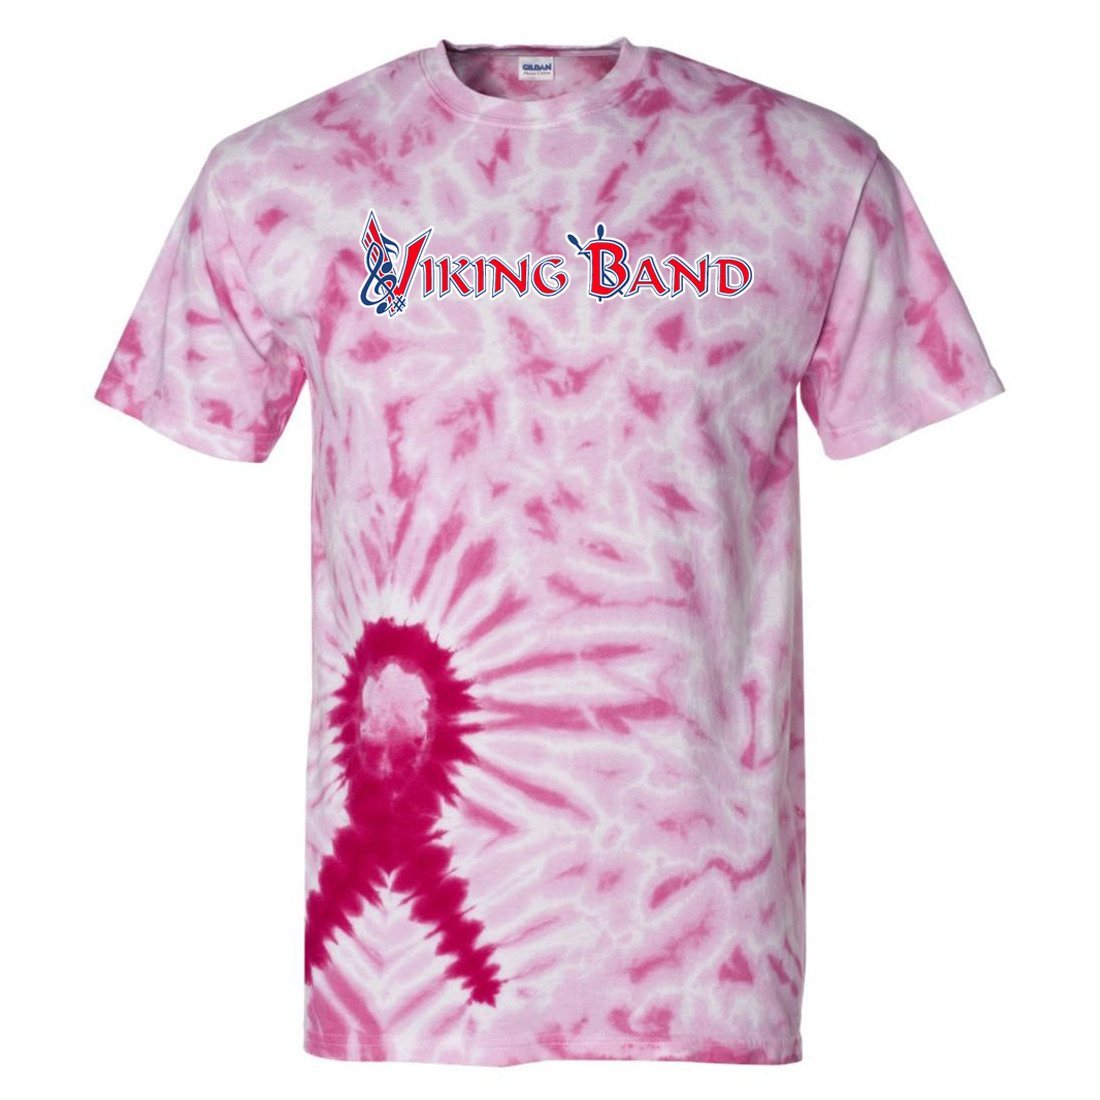 *NEW* Fort Walton Beach Vikings Band Awareness Ribbon Tie-Dyed T-Shirt